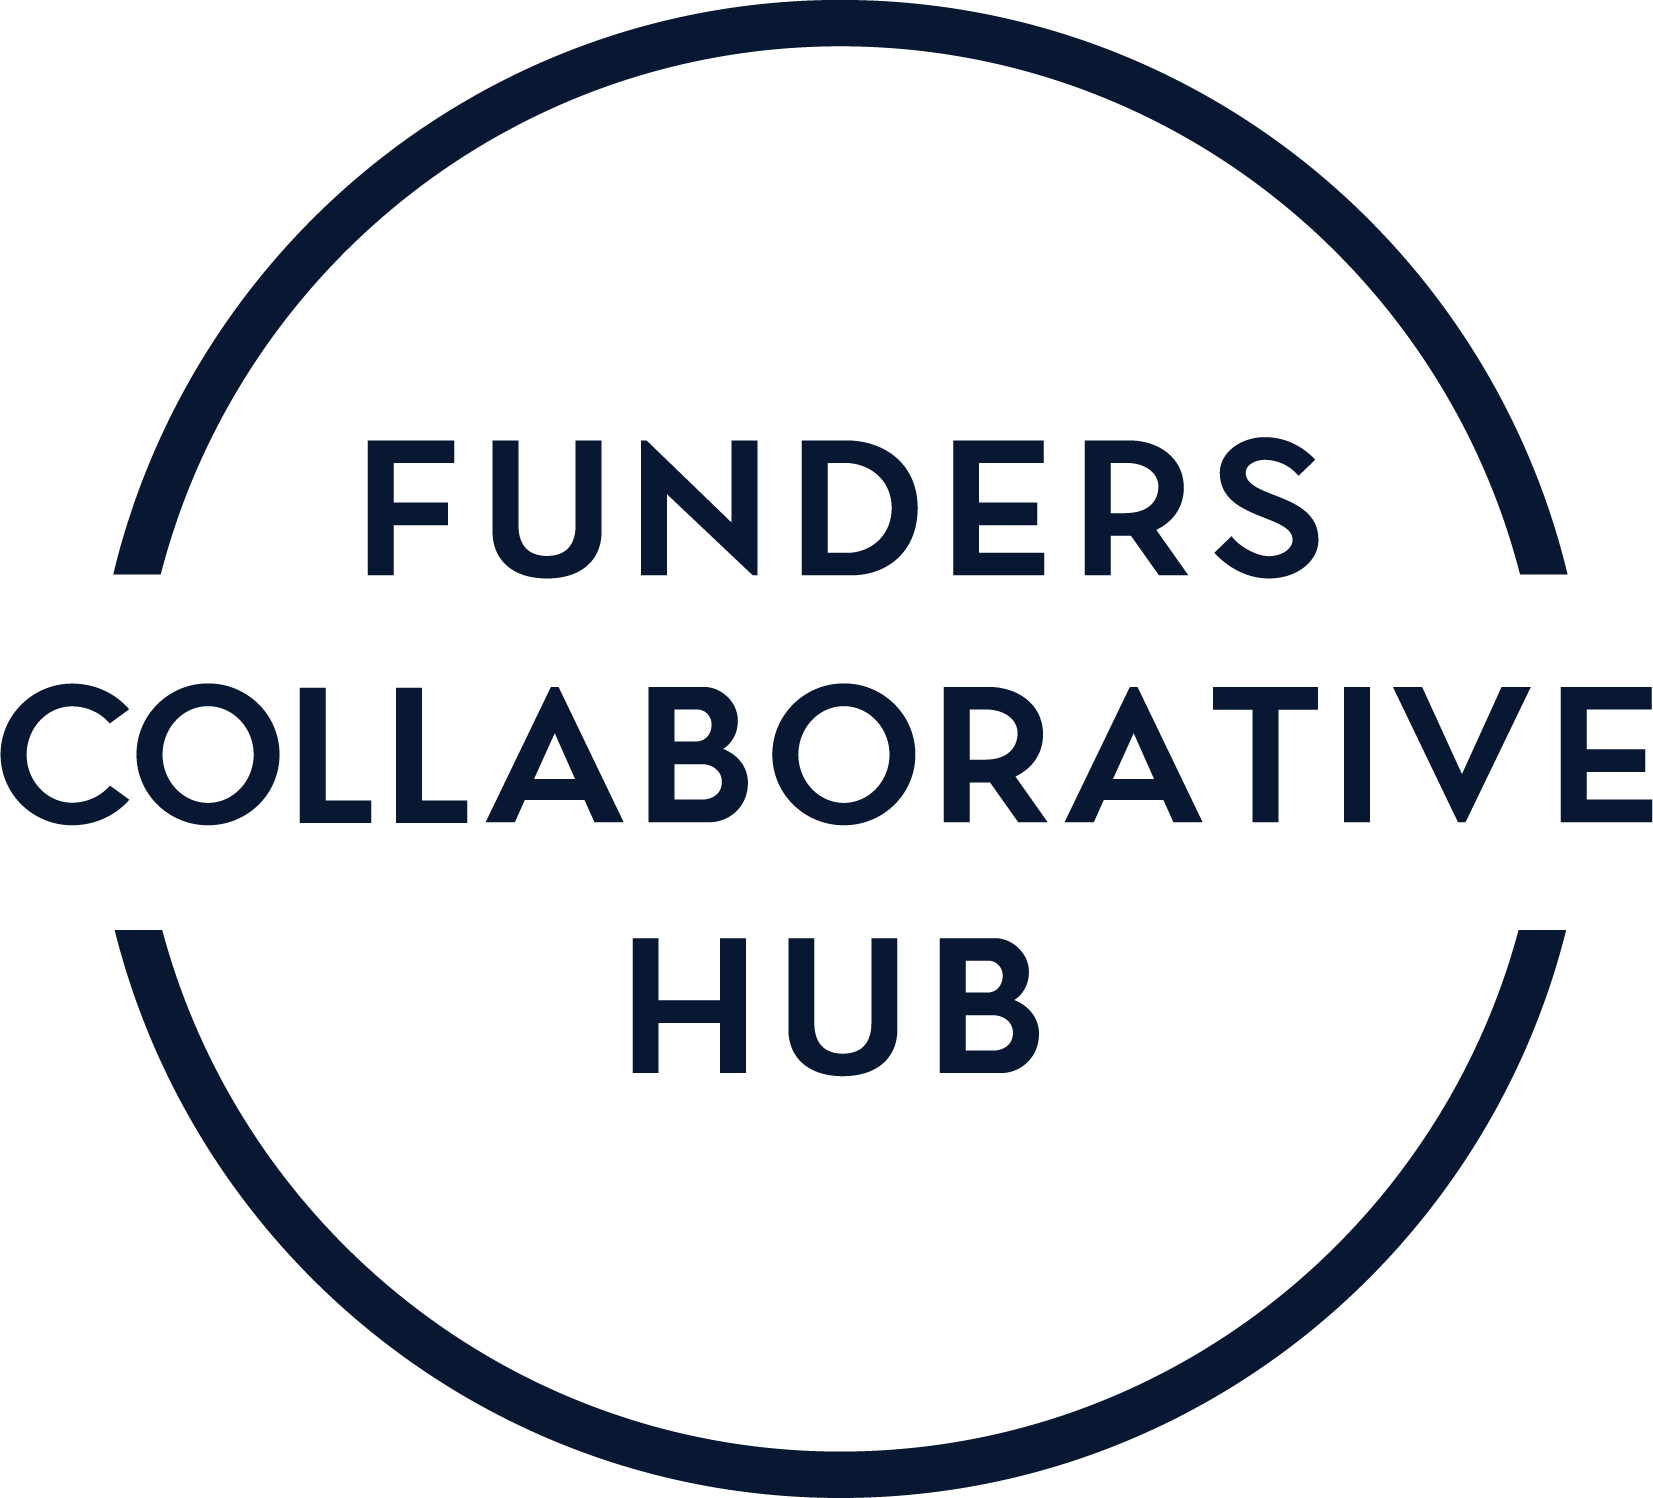 Funders Collaborative Hub logo